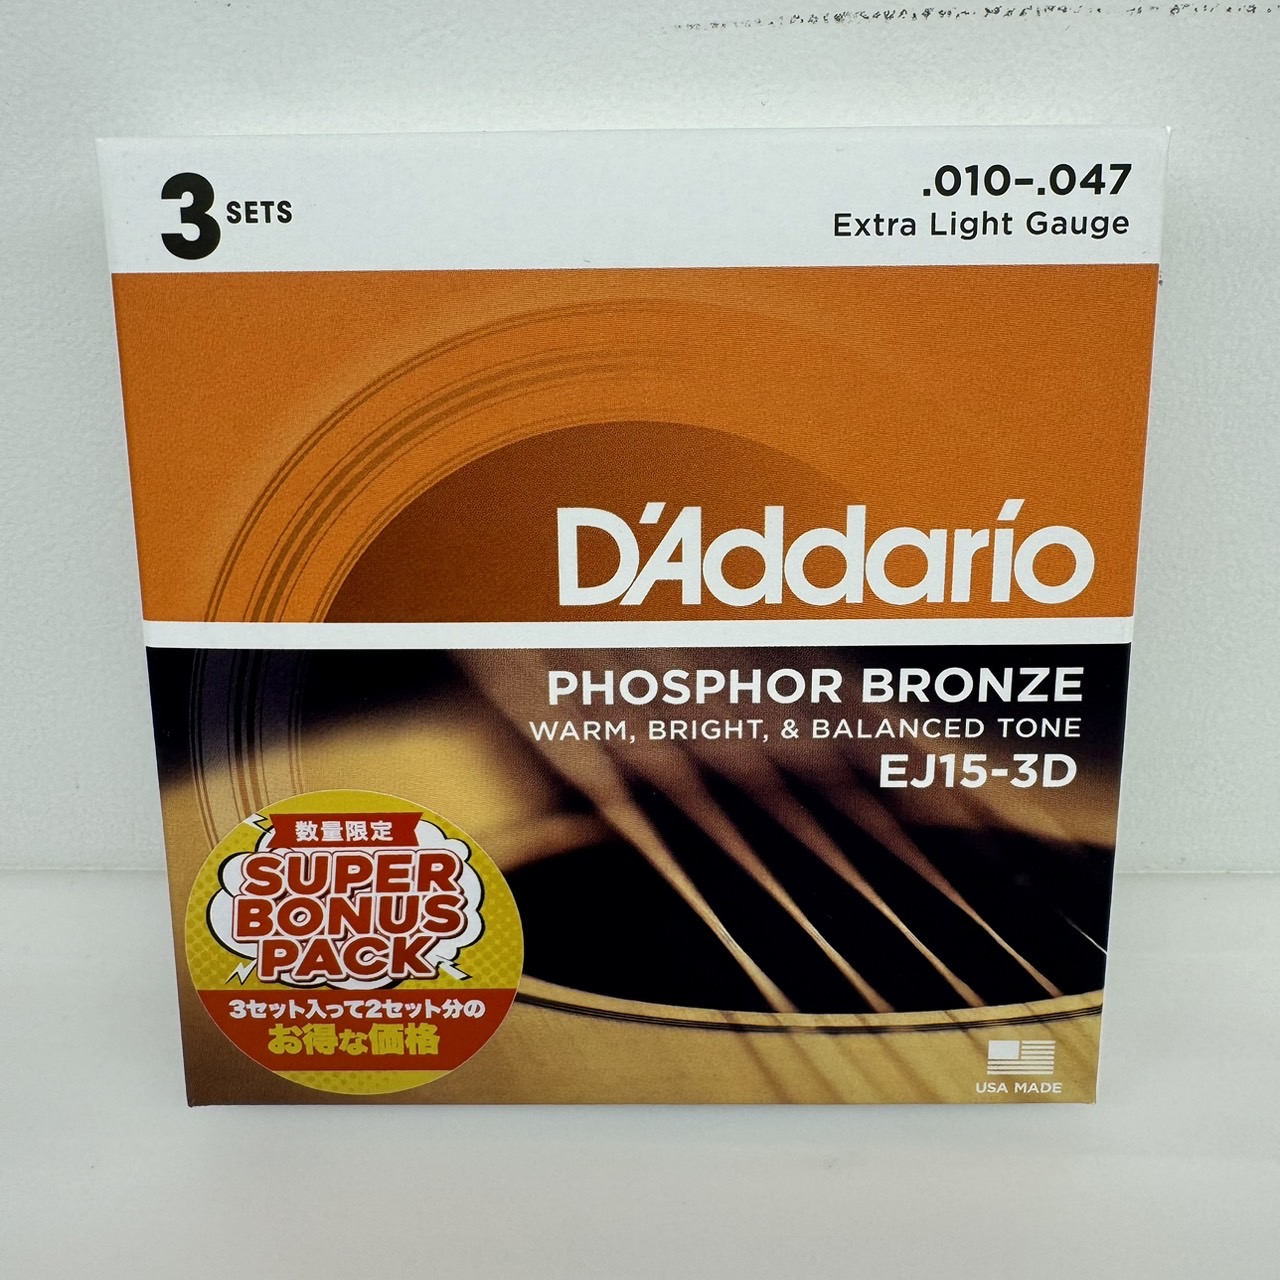 D'Addario EJ15-3DBP 10-47 Extra Light アコースティックギター弦 3セット入りパック エクストラライト フォスファー ブロンズ - アクセサリー・パーツ